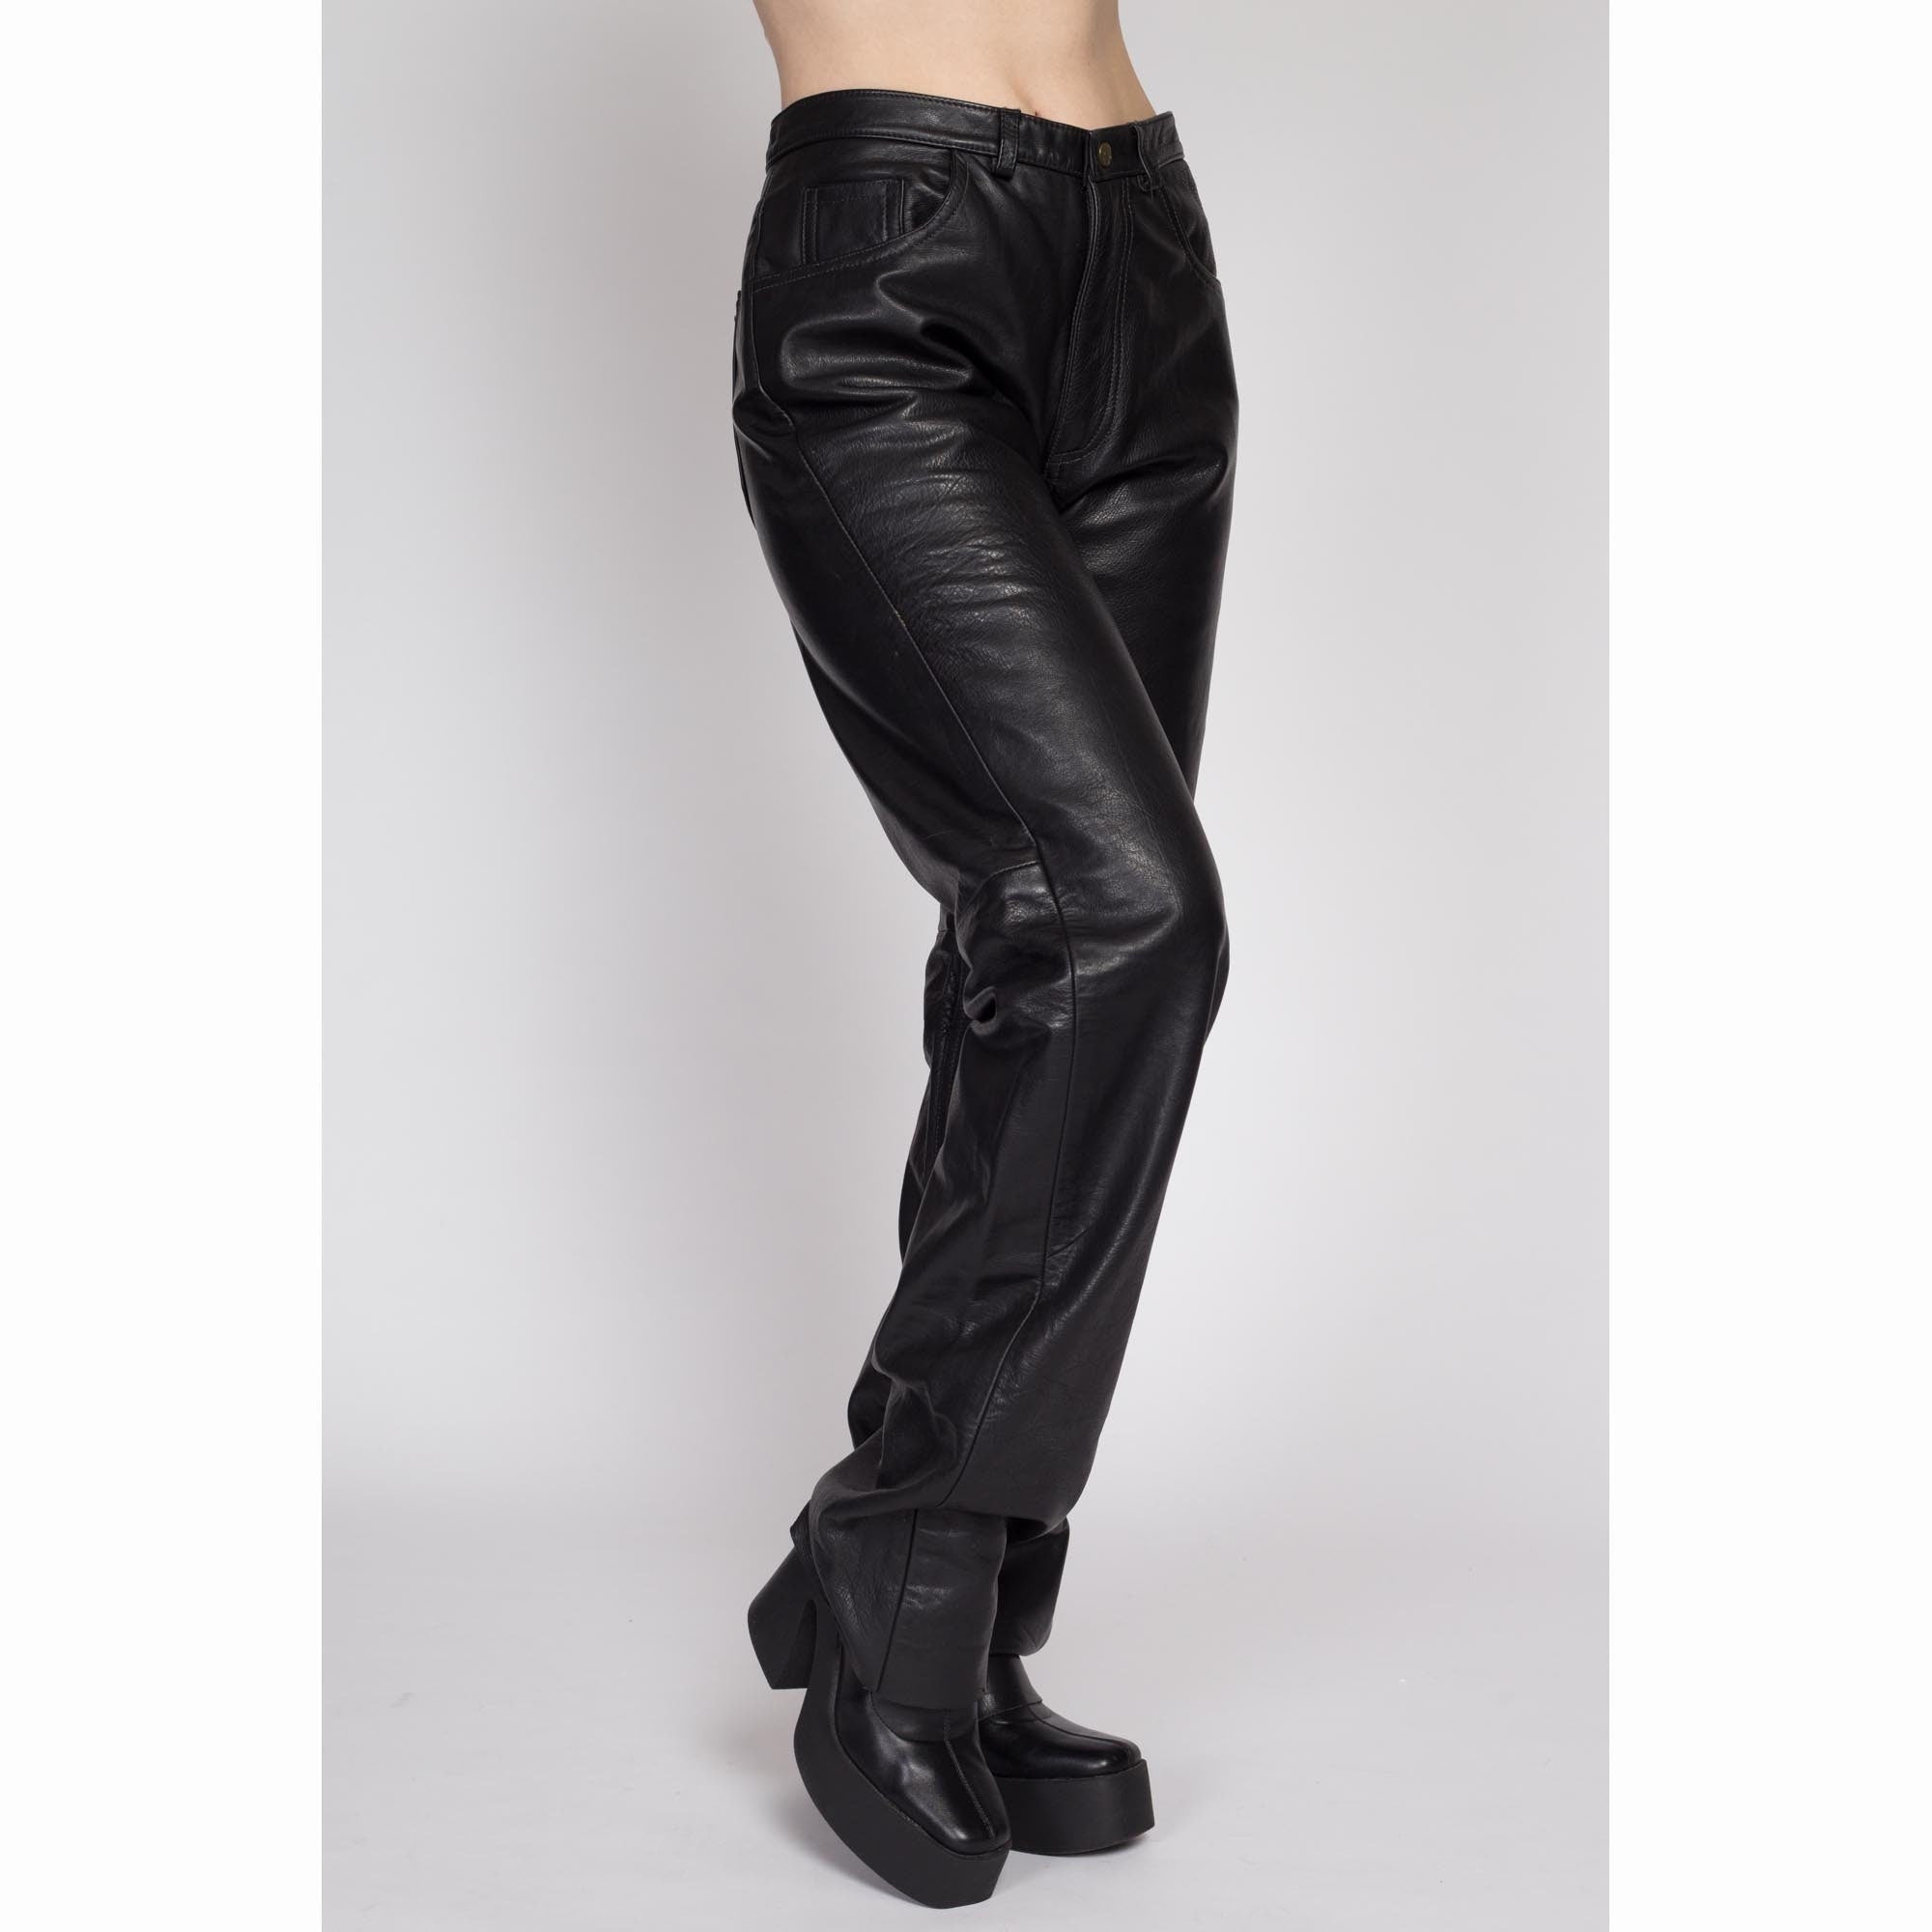 Women's Faux Leather Bootcut Trousers stretch wet look Black Pants | eBay